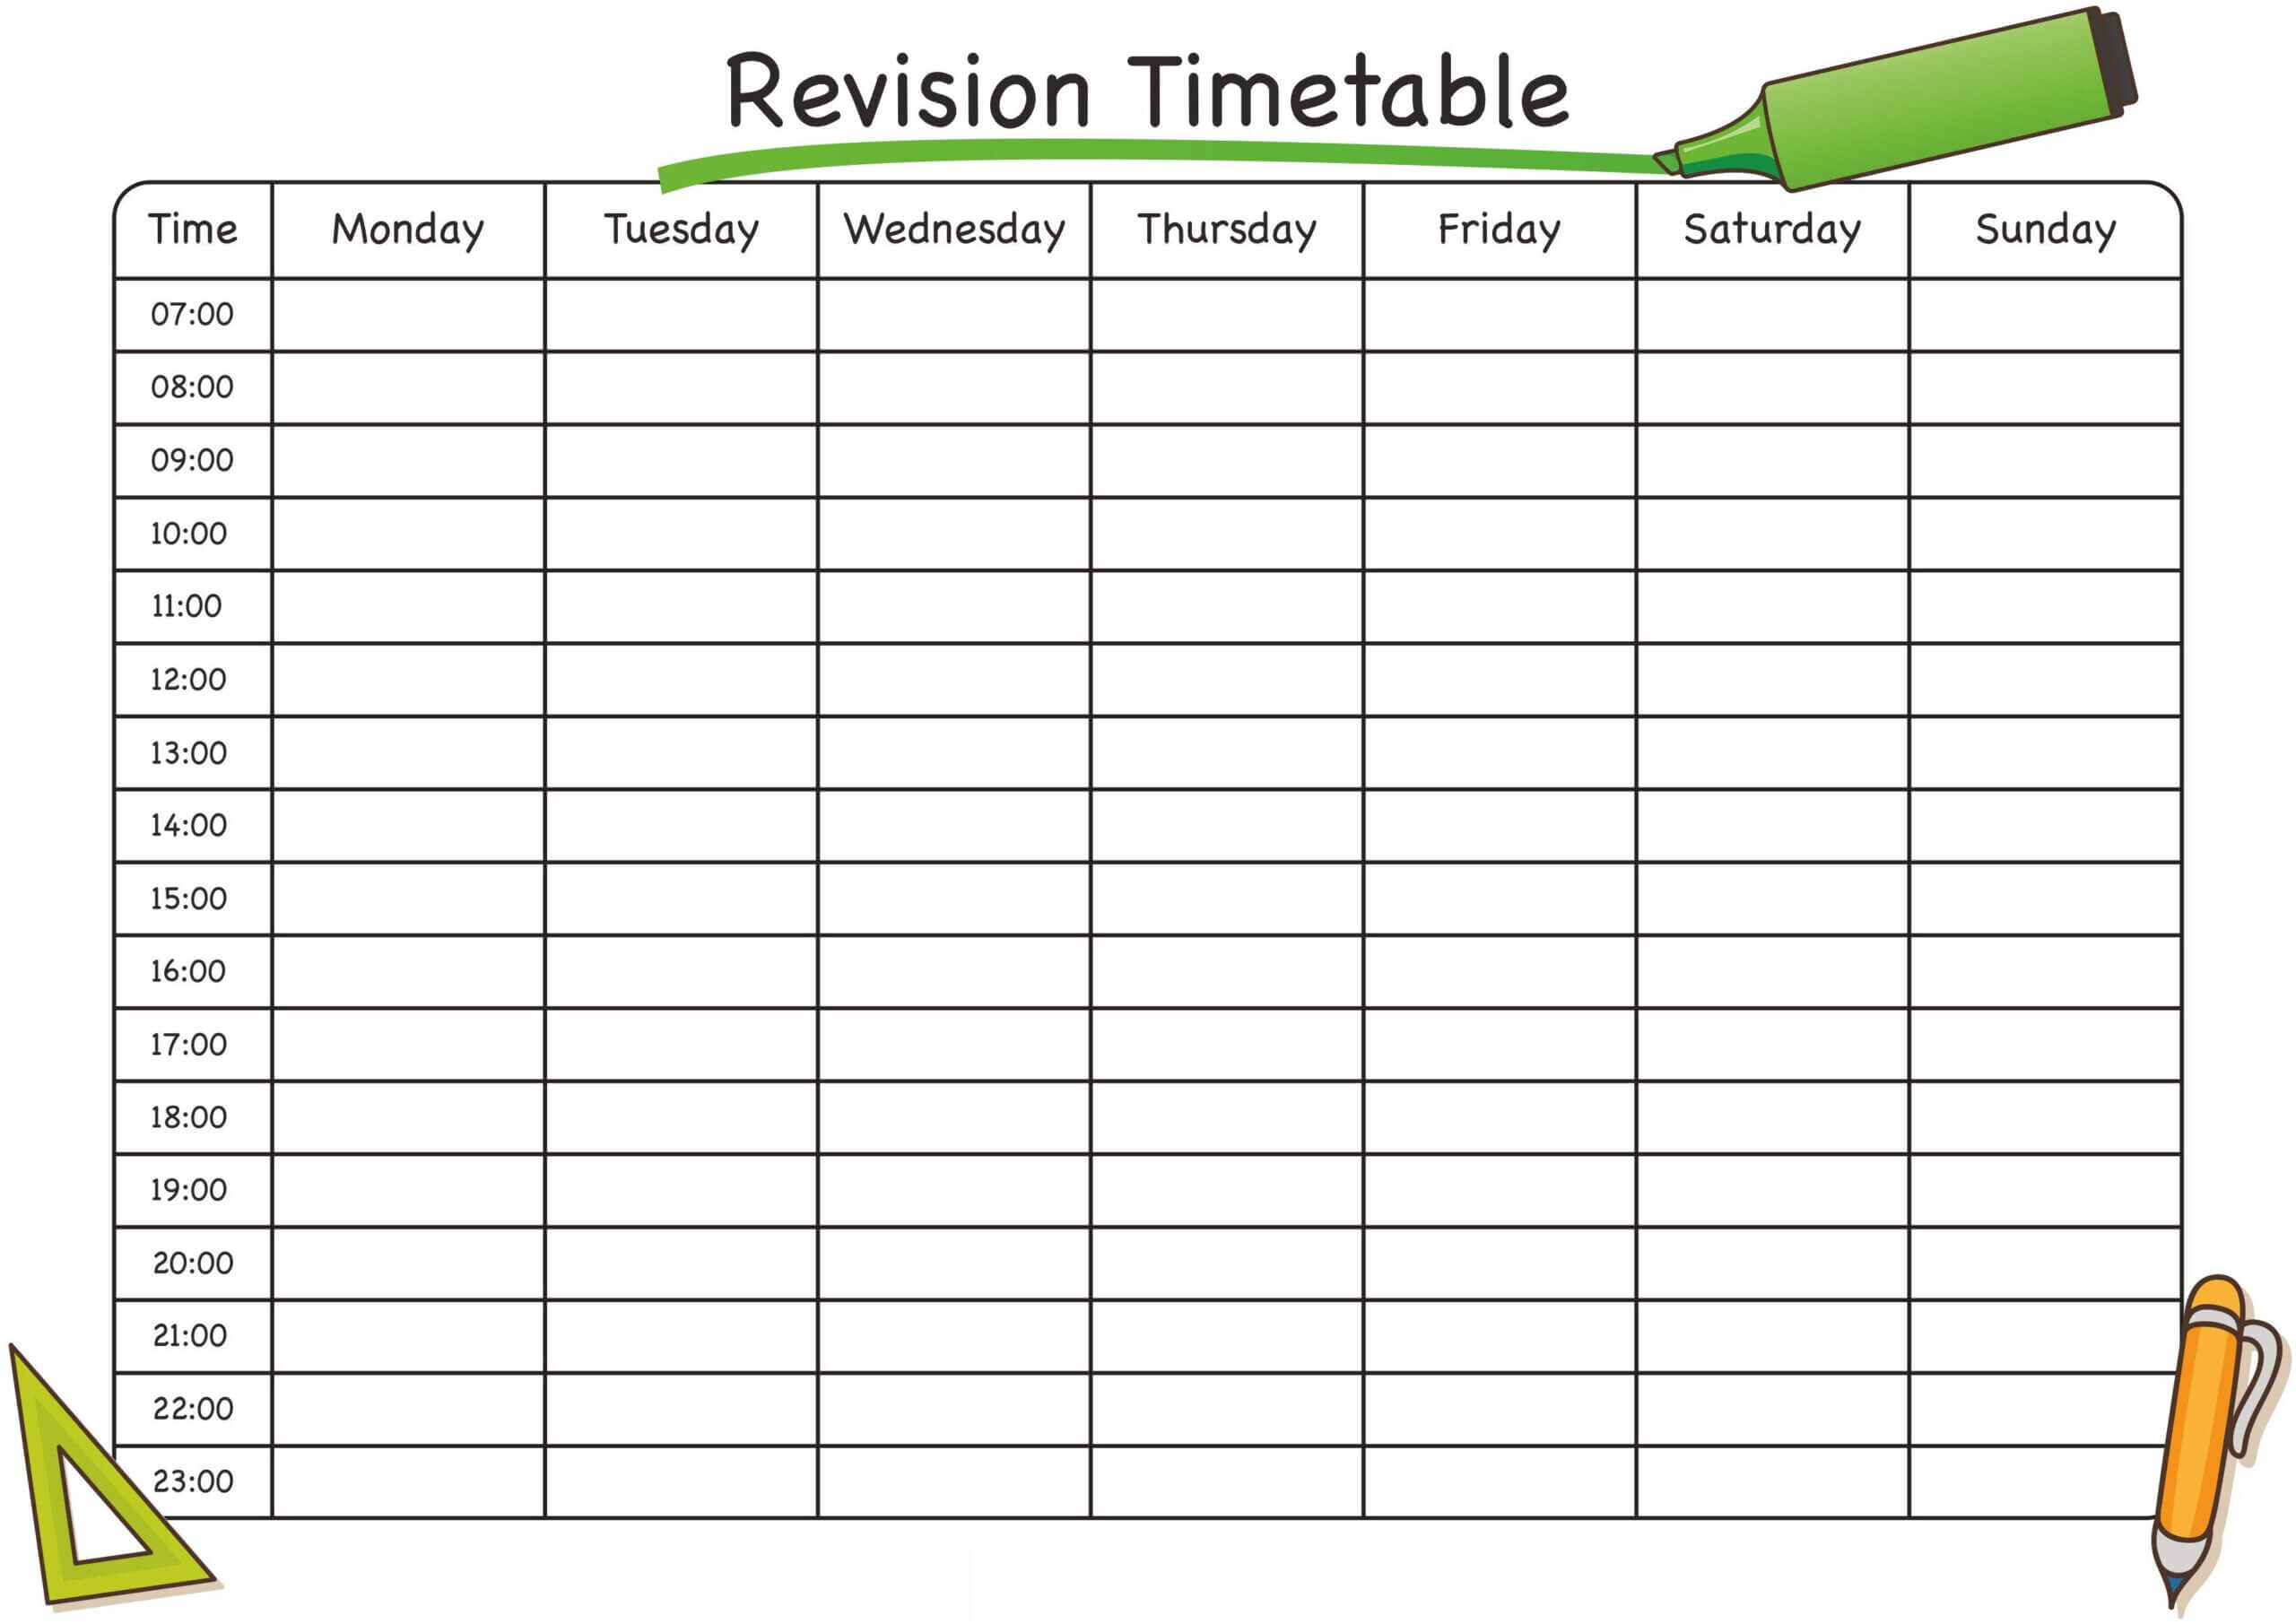 Timetable Template Free #timetabletemplateexcel | Timetable Regarding Blank Revision Timetable Template